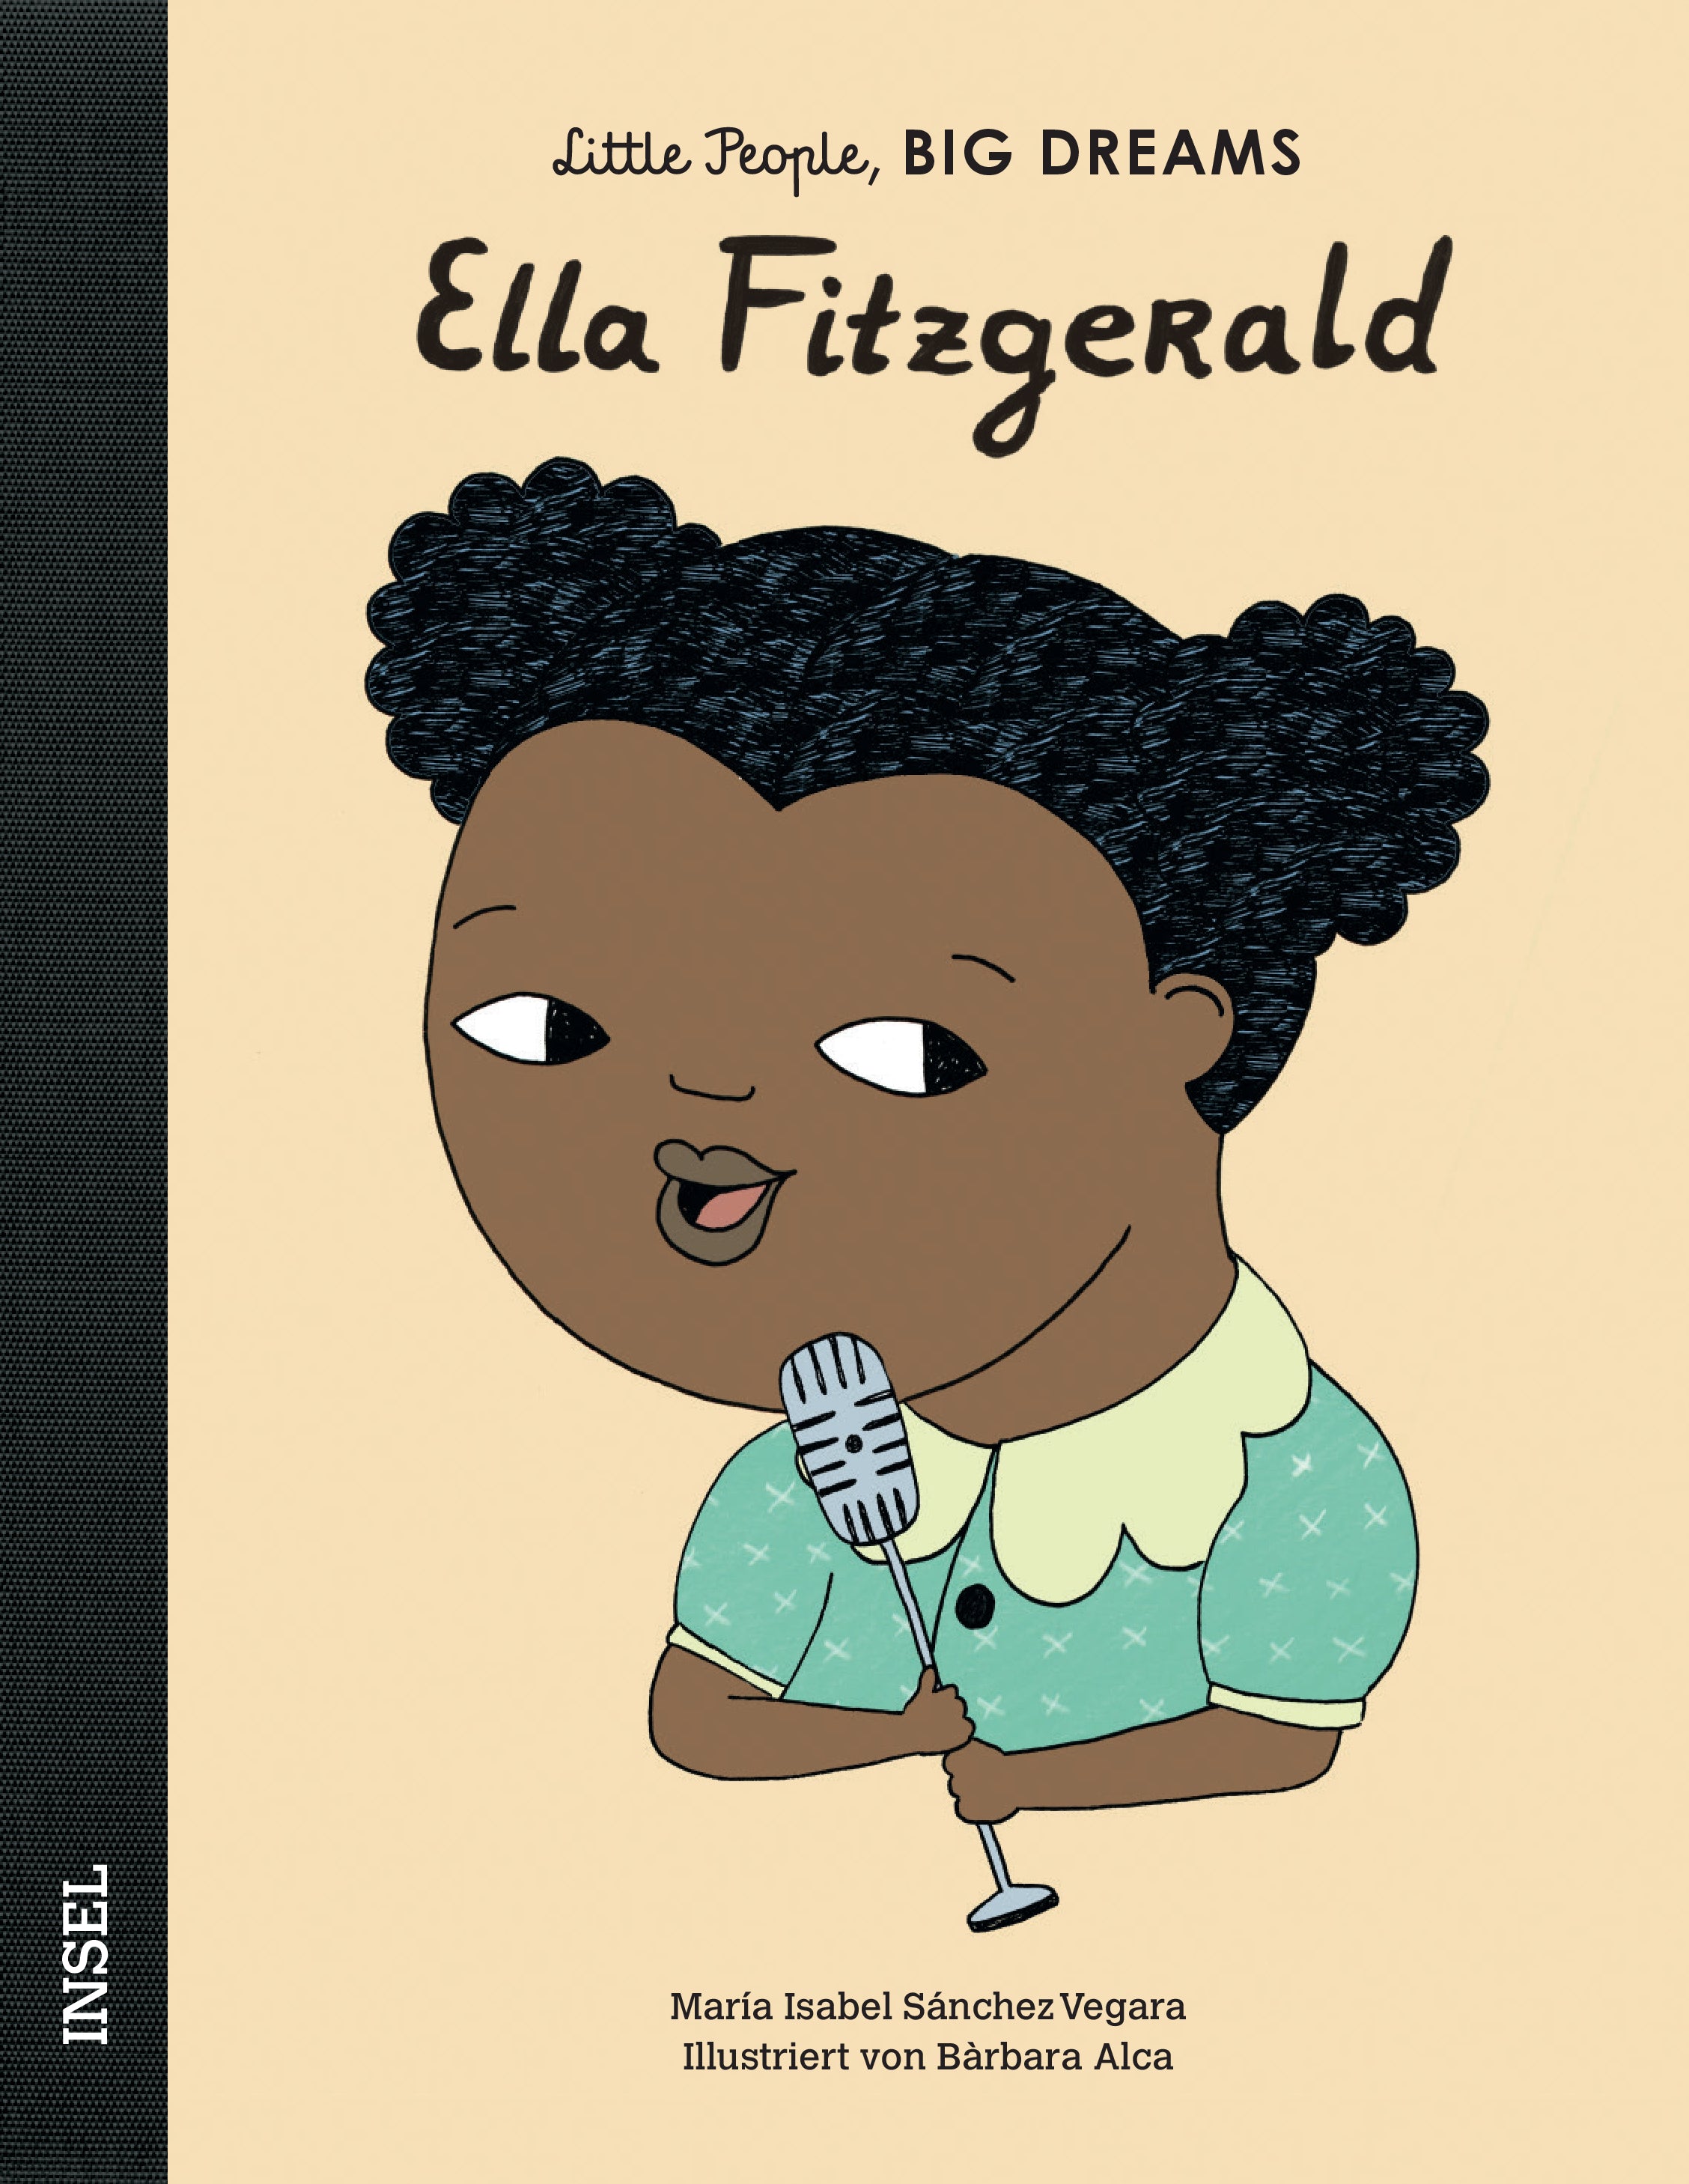 Little People - Ella Fitzgerald